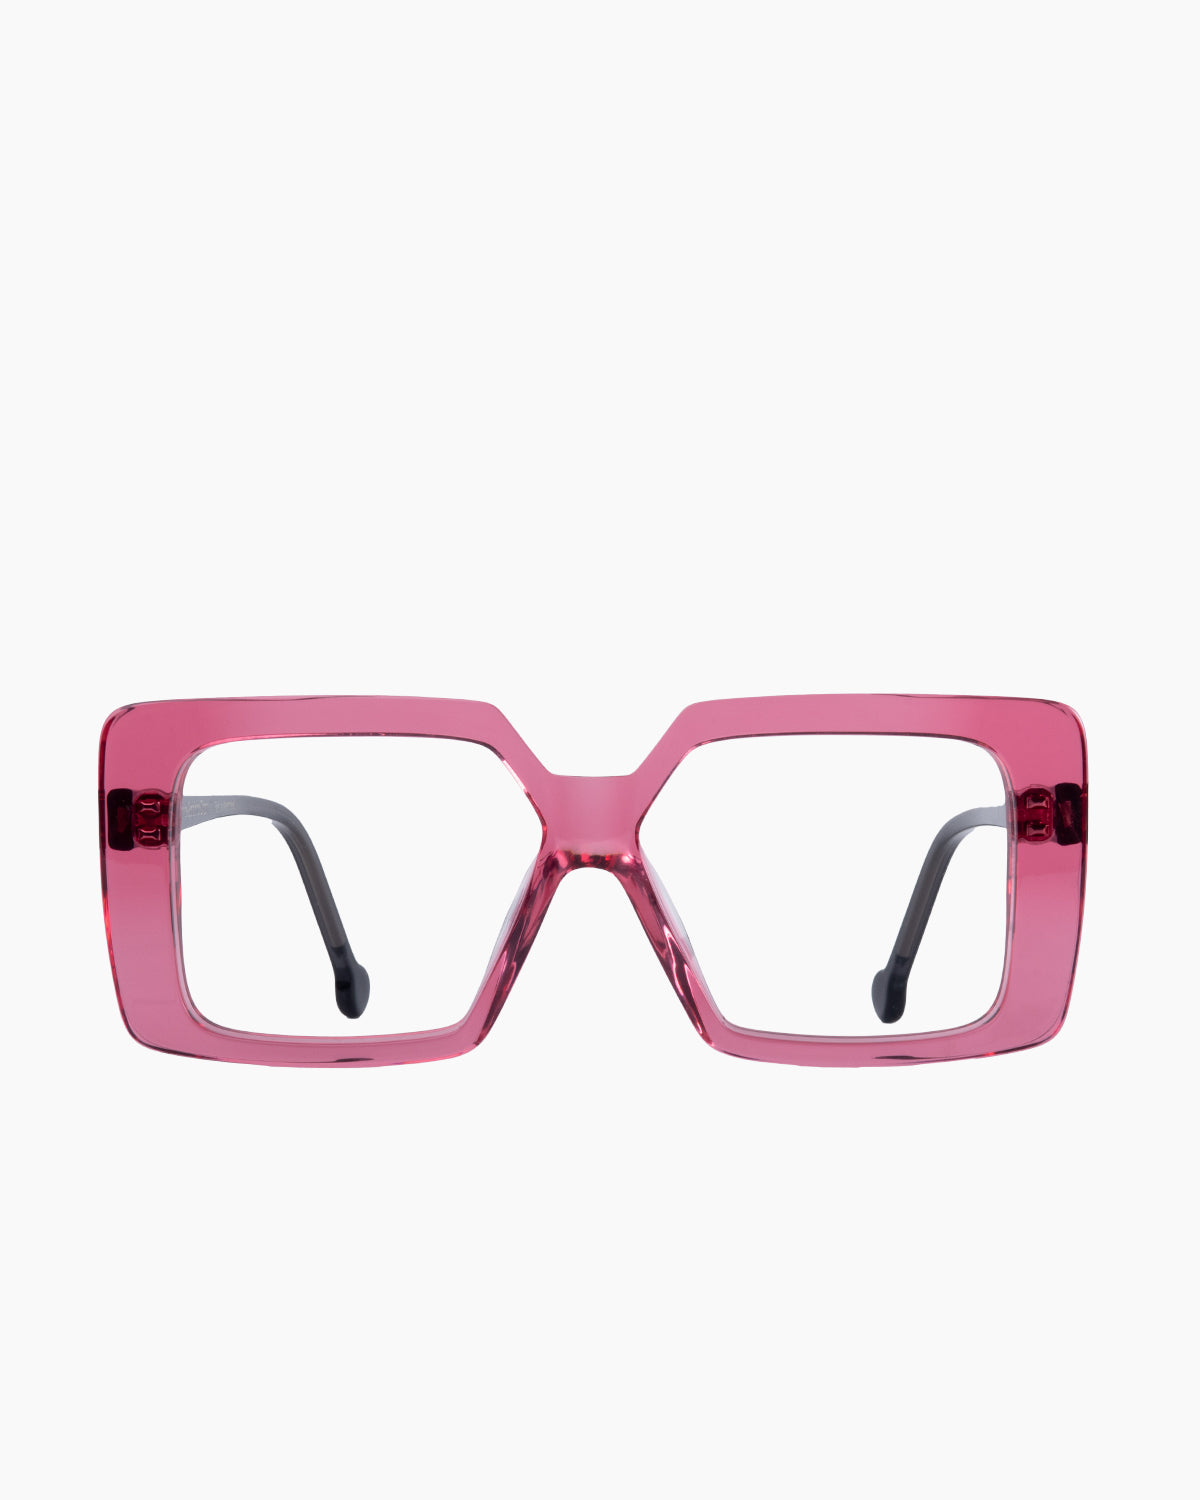 Marie-Sophie Dion - Volta - Ros | glasses bar